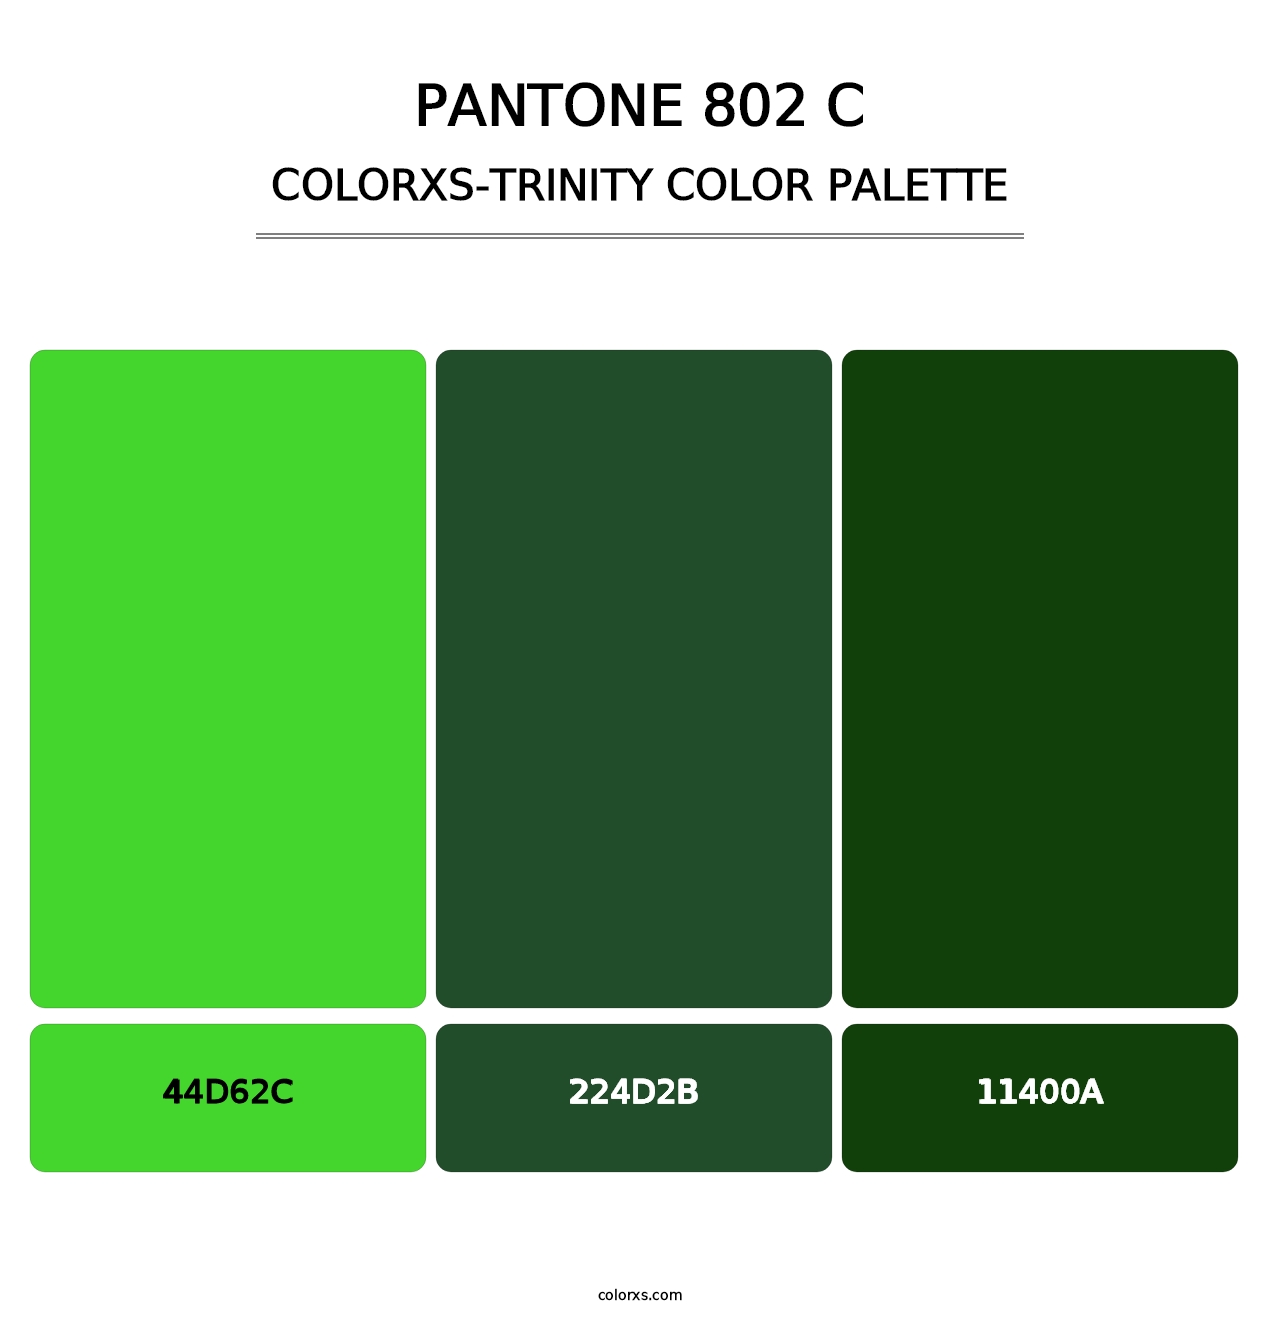 PANTONE 802 C - Colorxs Trinity Palette